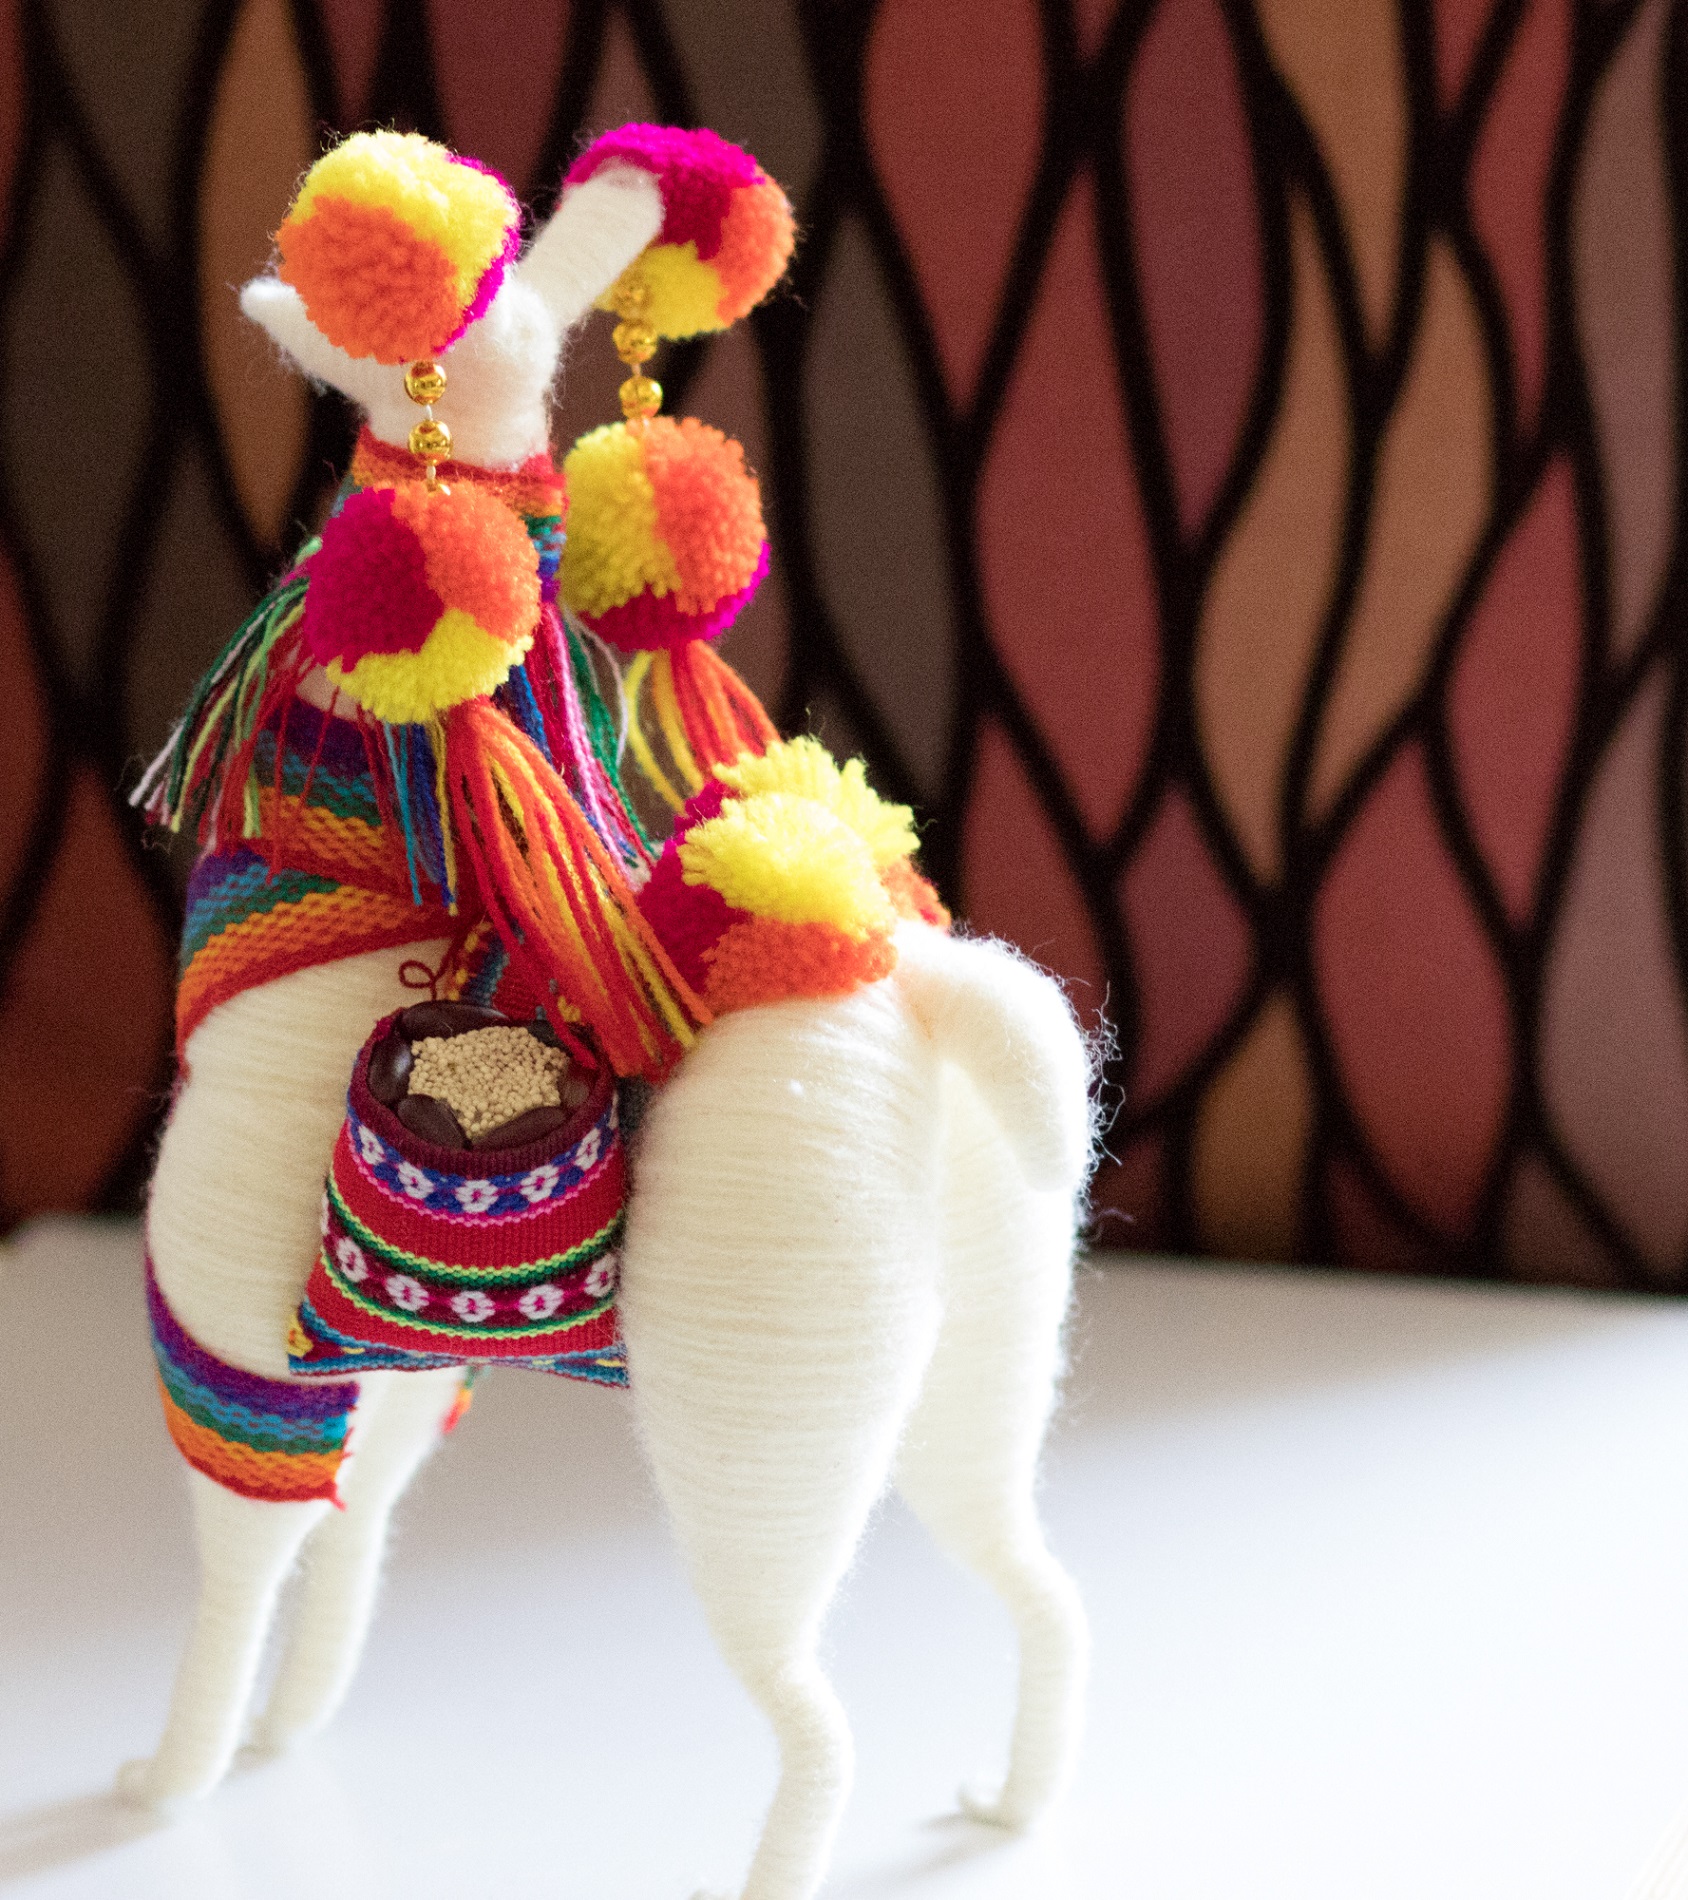 1 Peruvian Small Stuffed Llama Knitted Ornament 4 12 Collectable Handmade New Art Per